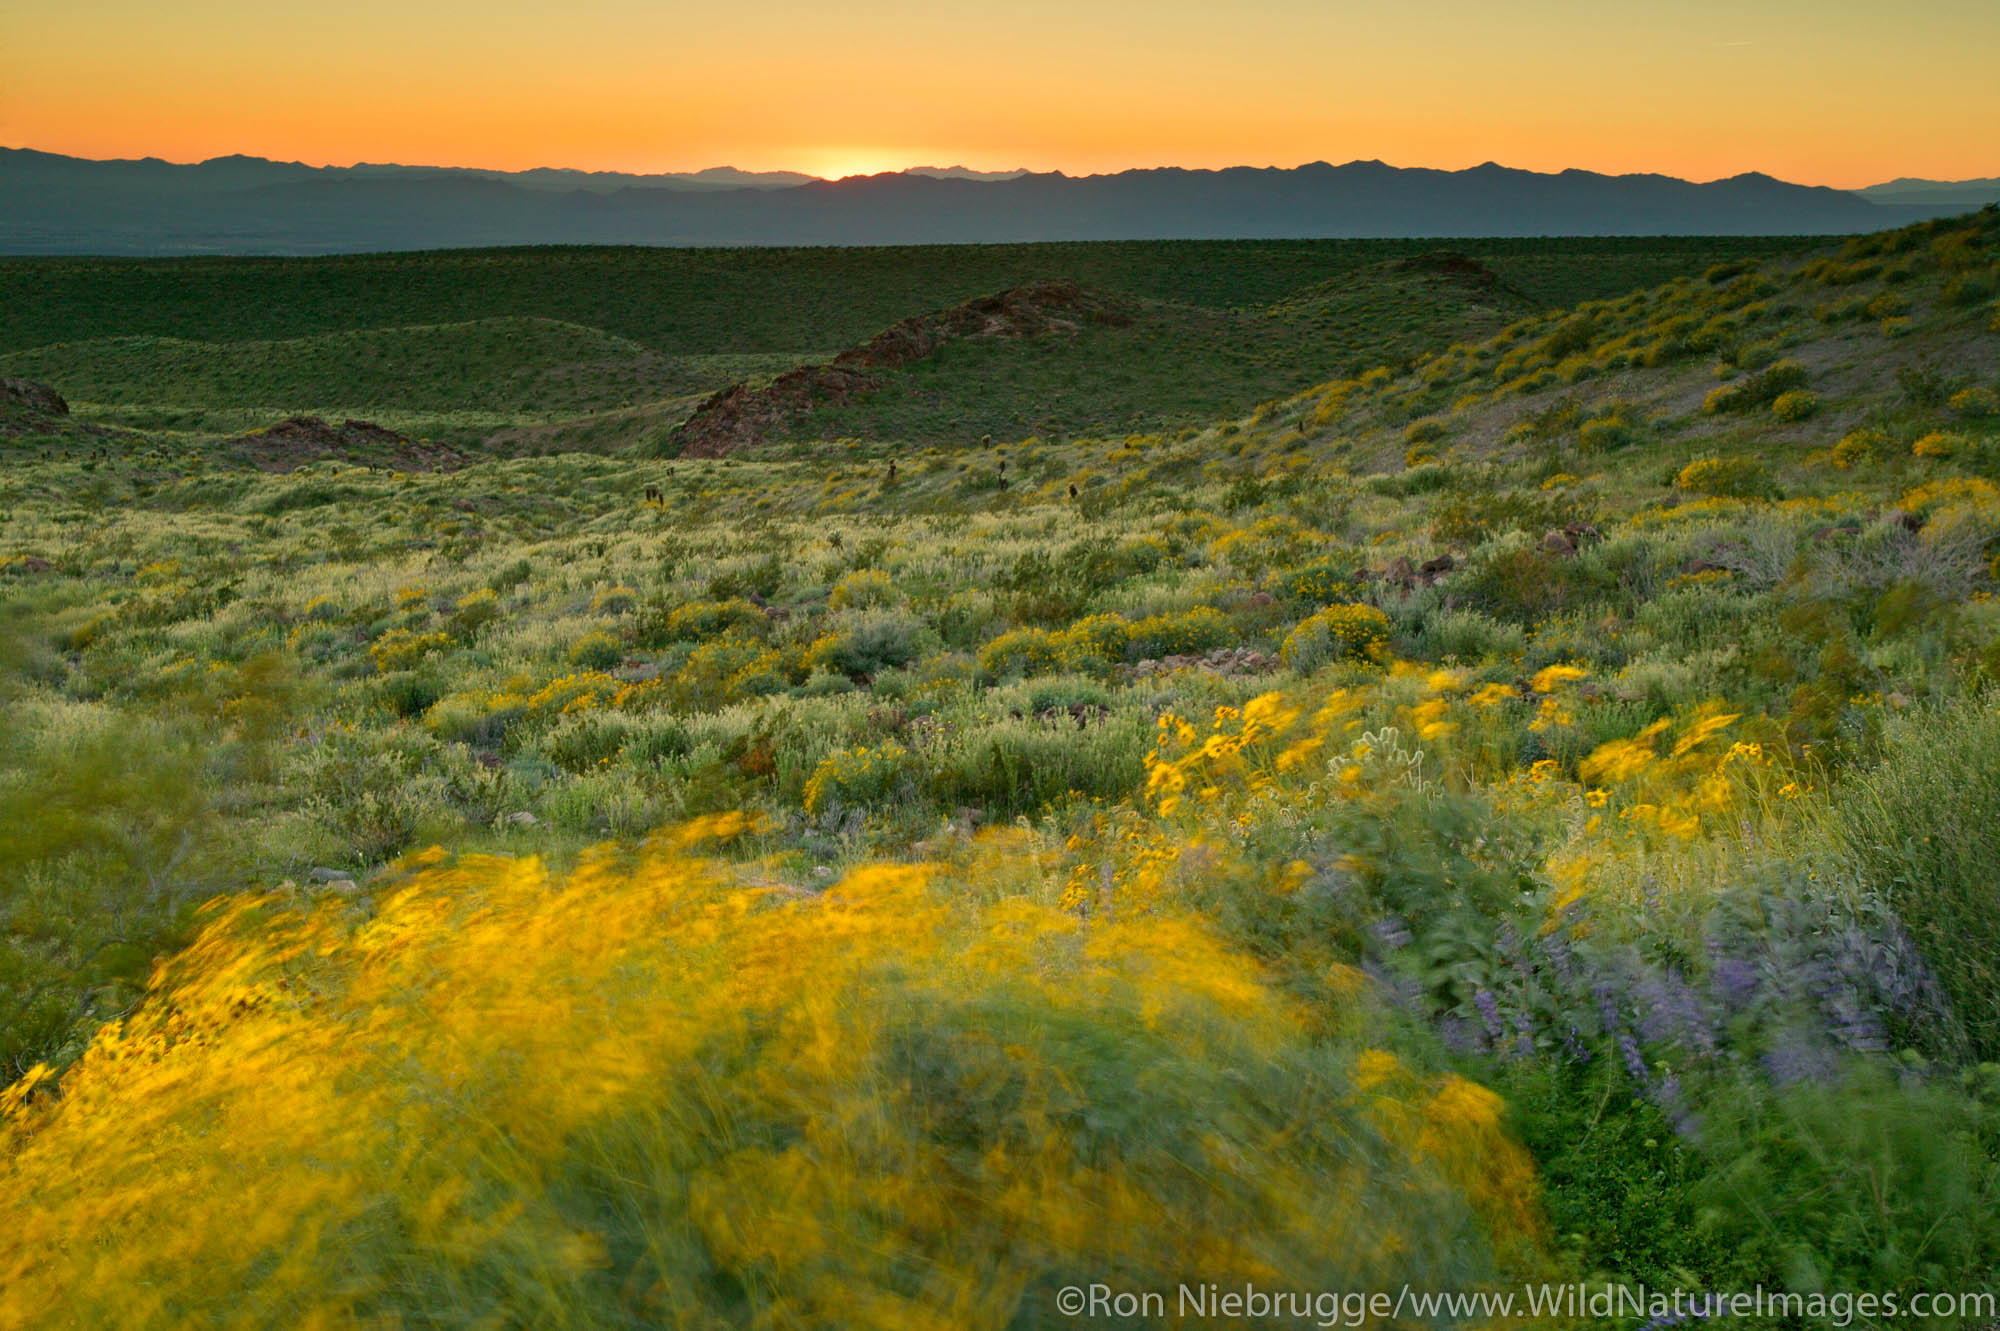 Wildflowers including Brittlebush at sunset along Route 66, near Oatman, Arizona.